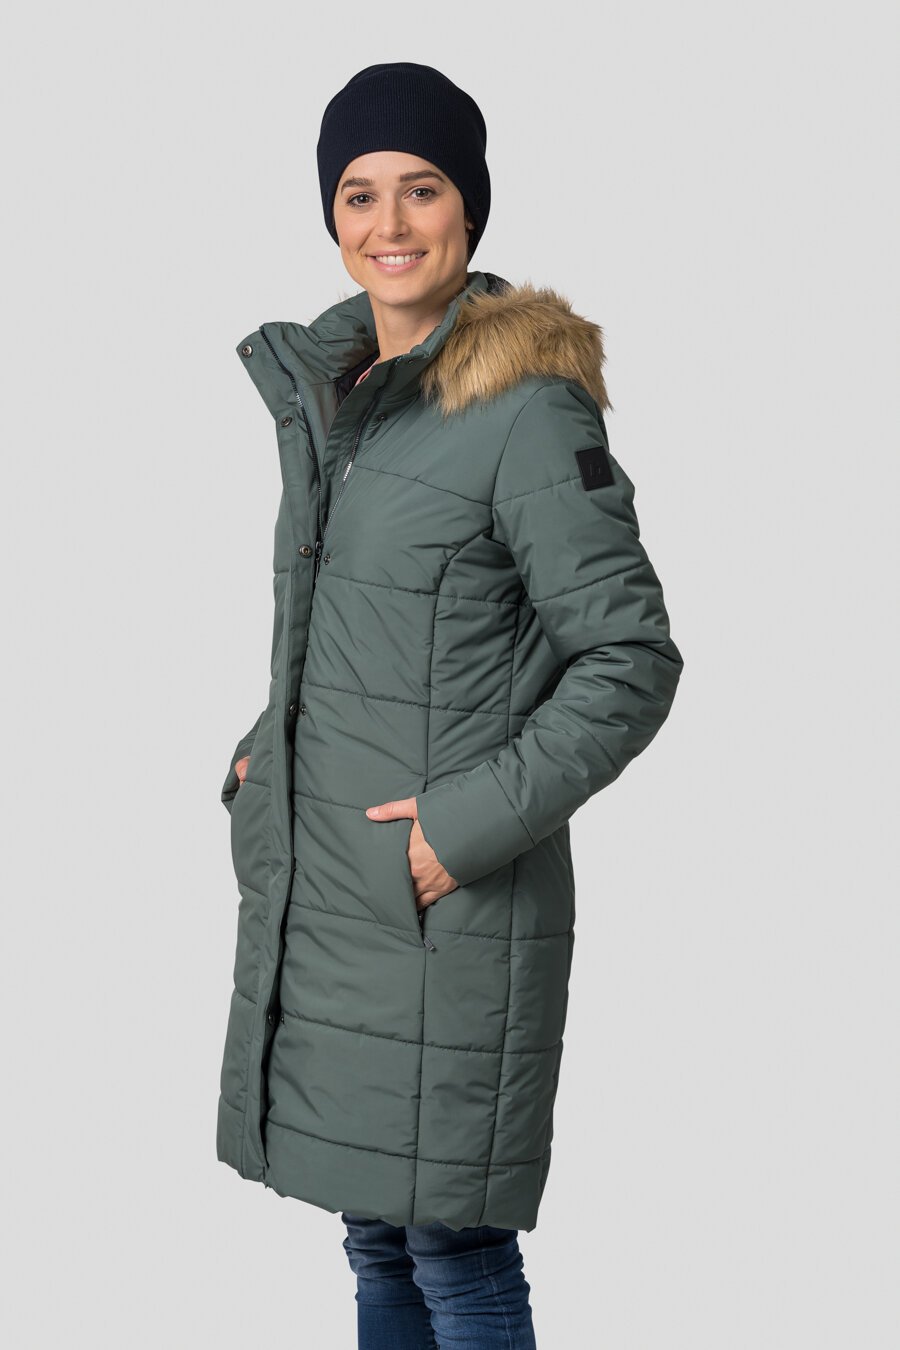 Coat HANNAH GEMA Lady, dark forest - Hannah - Outdoor clothing and